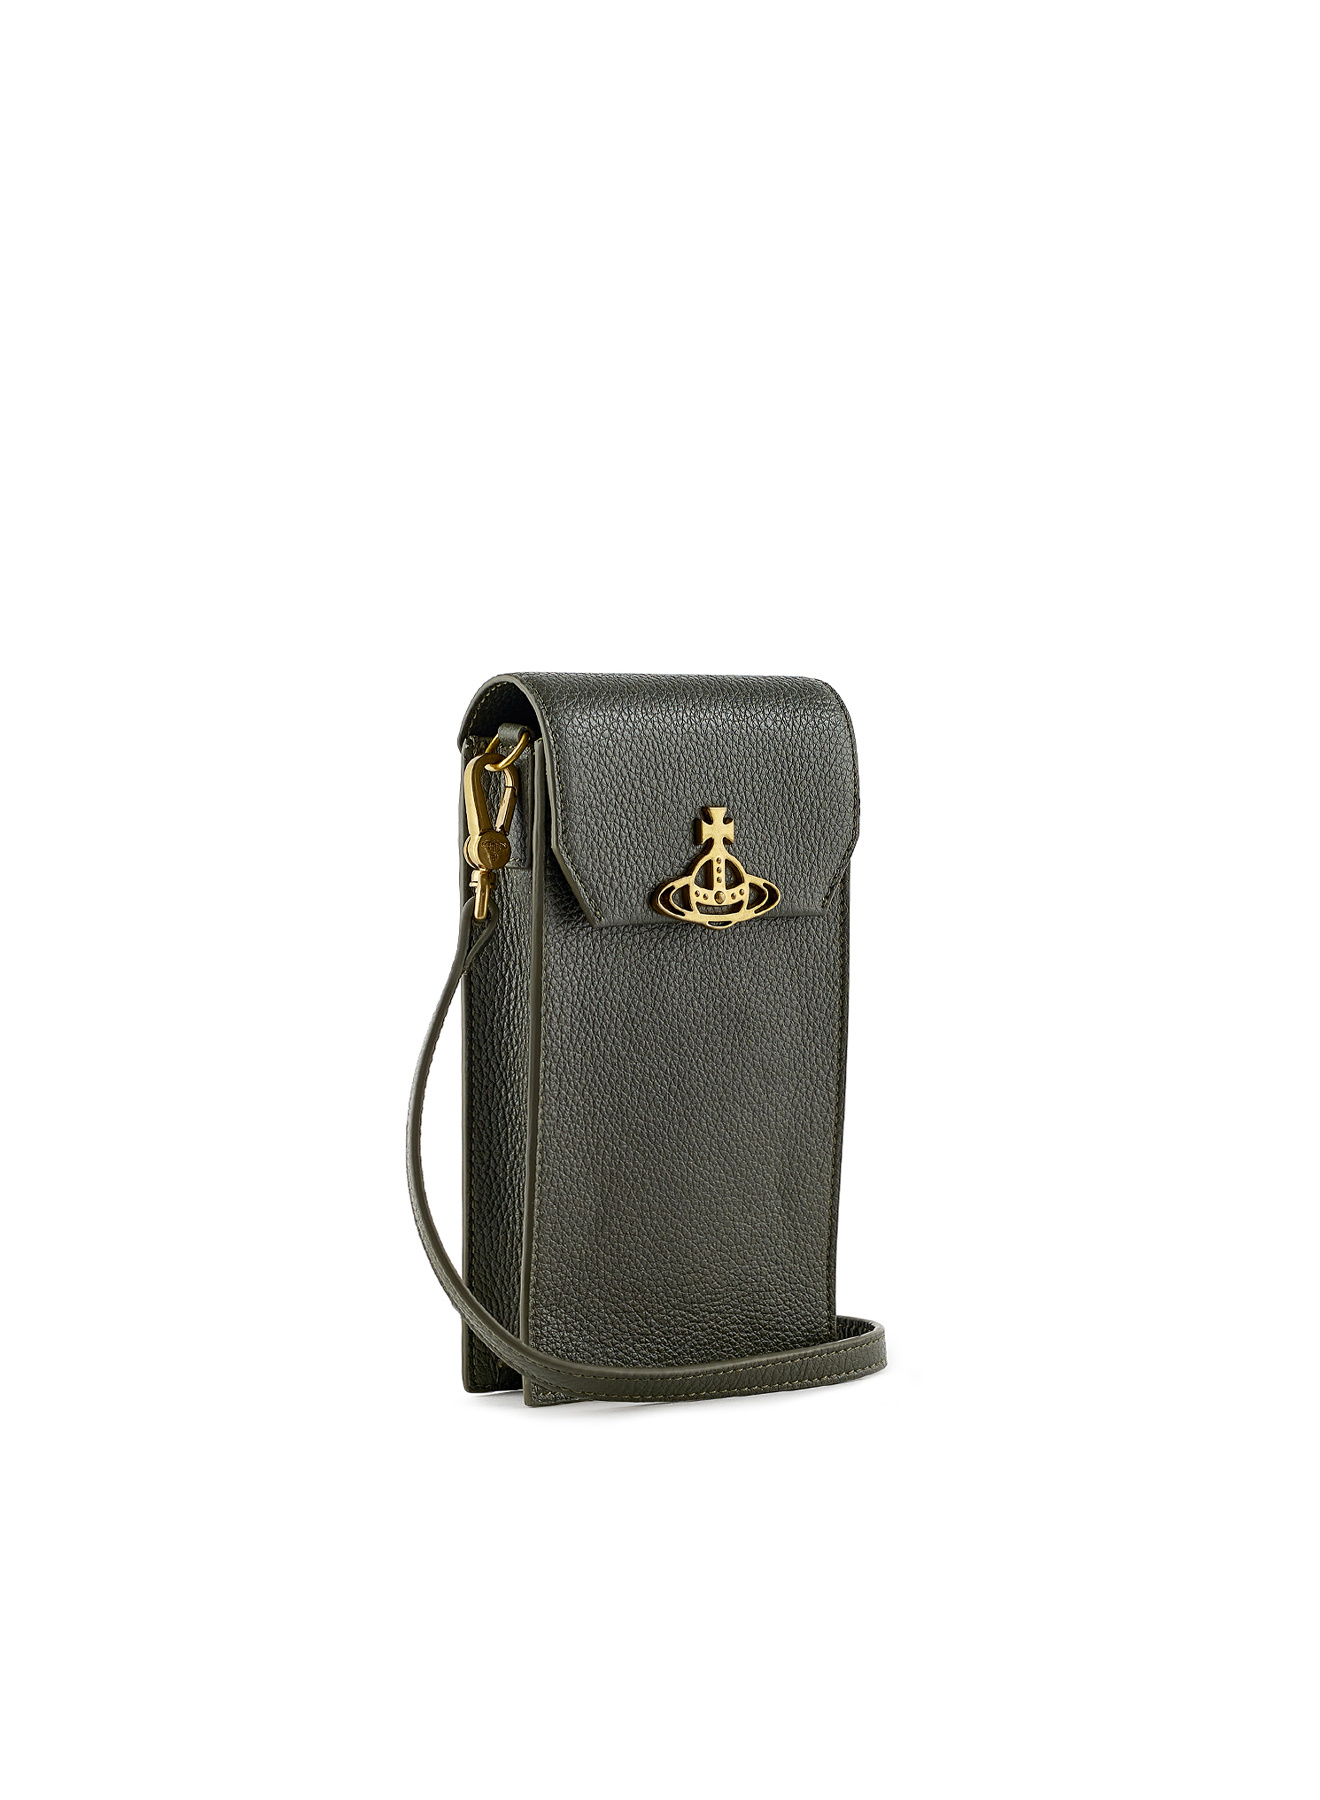 Vivienne Westwood Grain Leather Phone Bag